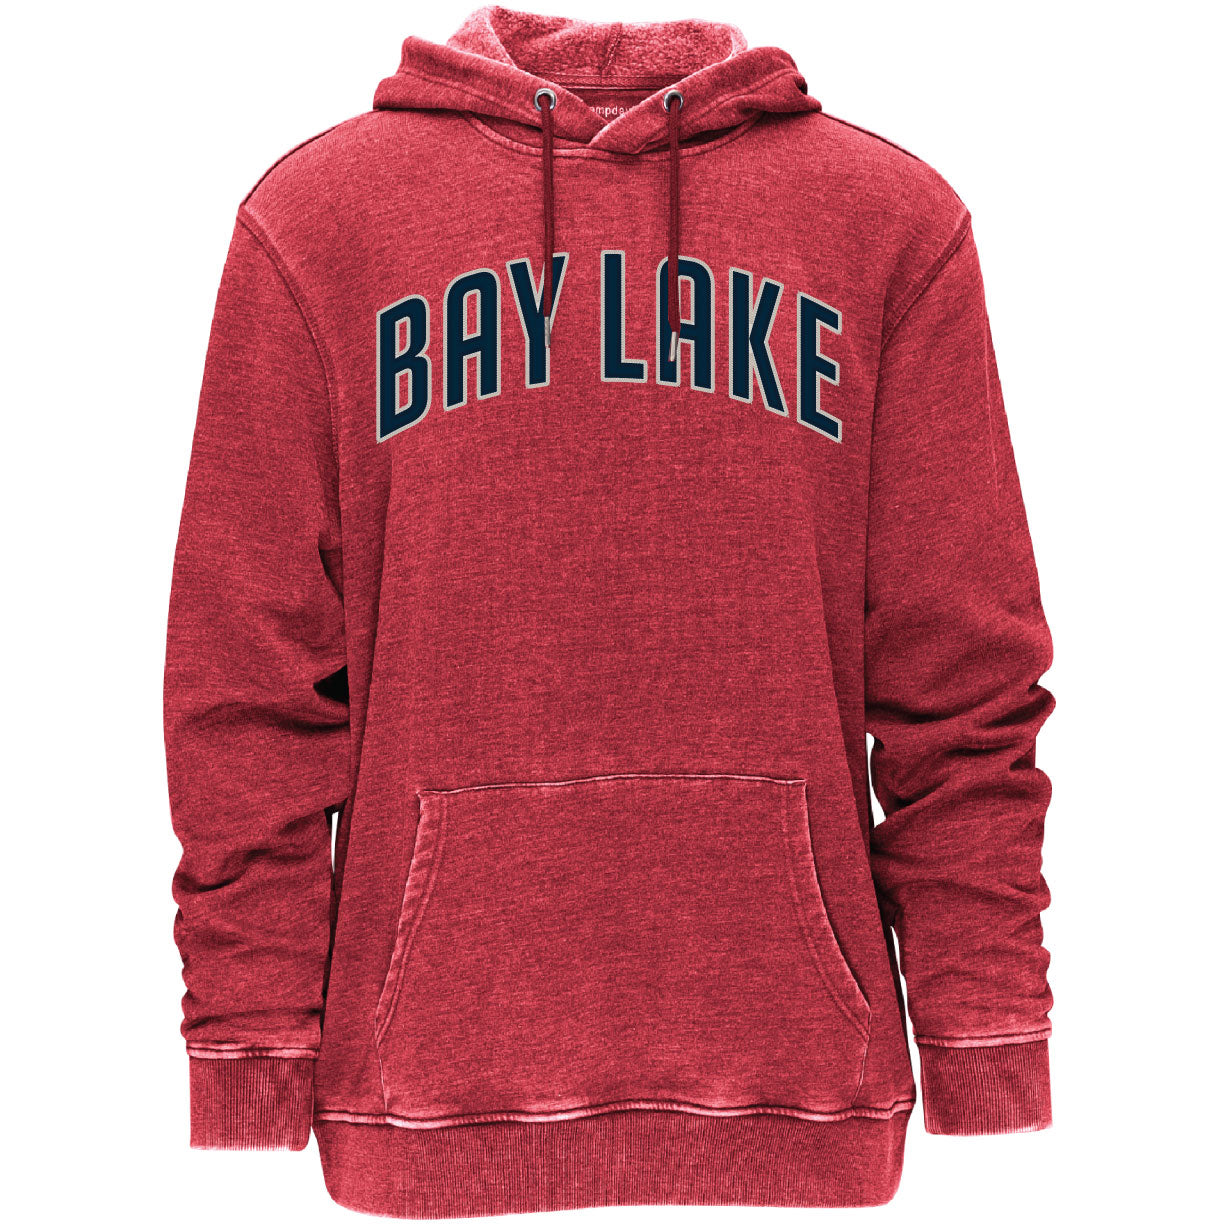 Bay Lake Vintage Hood - Chili